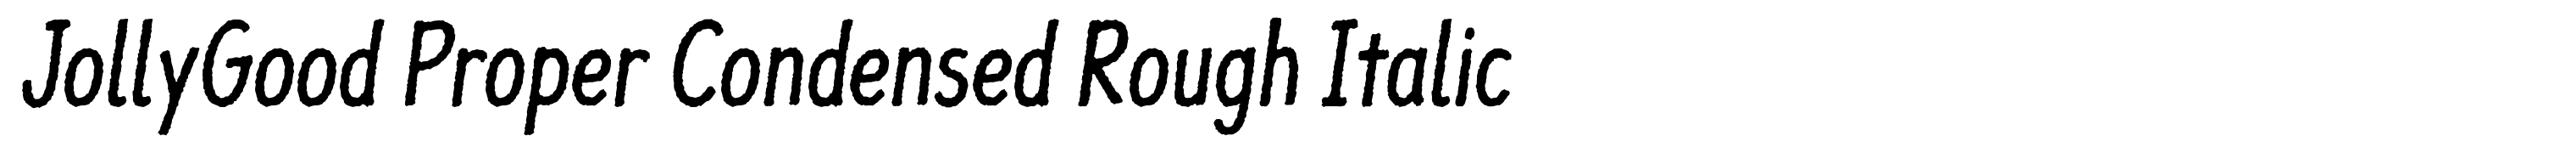 JollyGood Proper Condensed Rough Italic